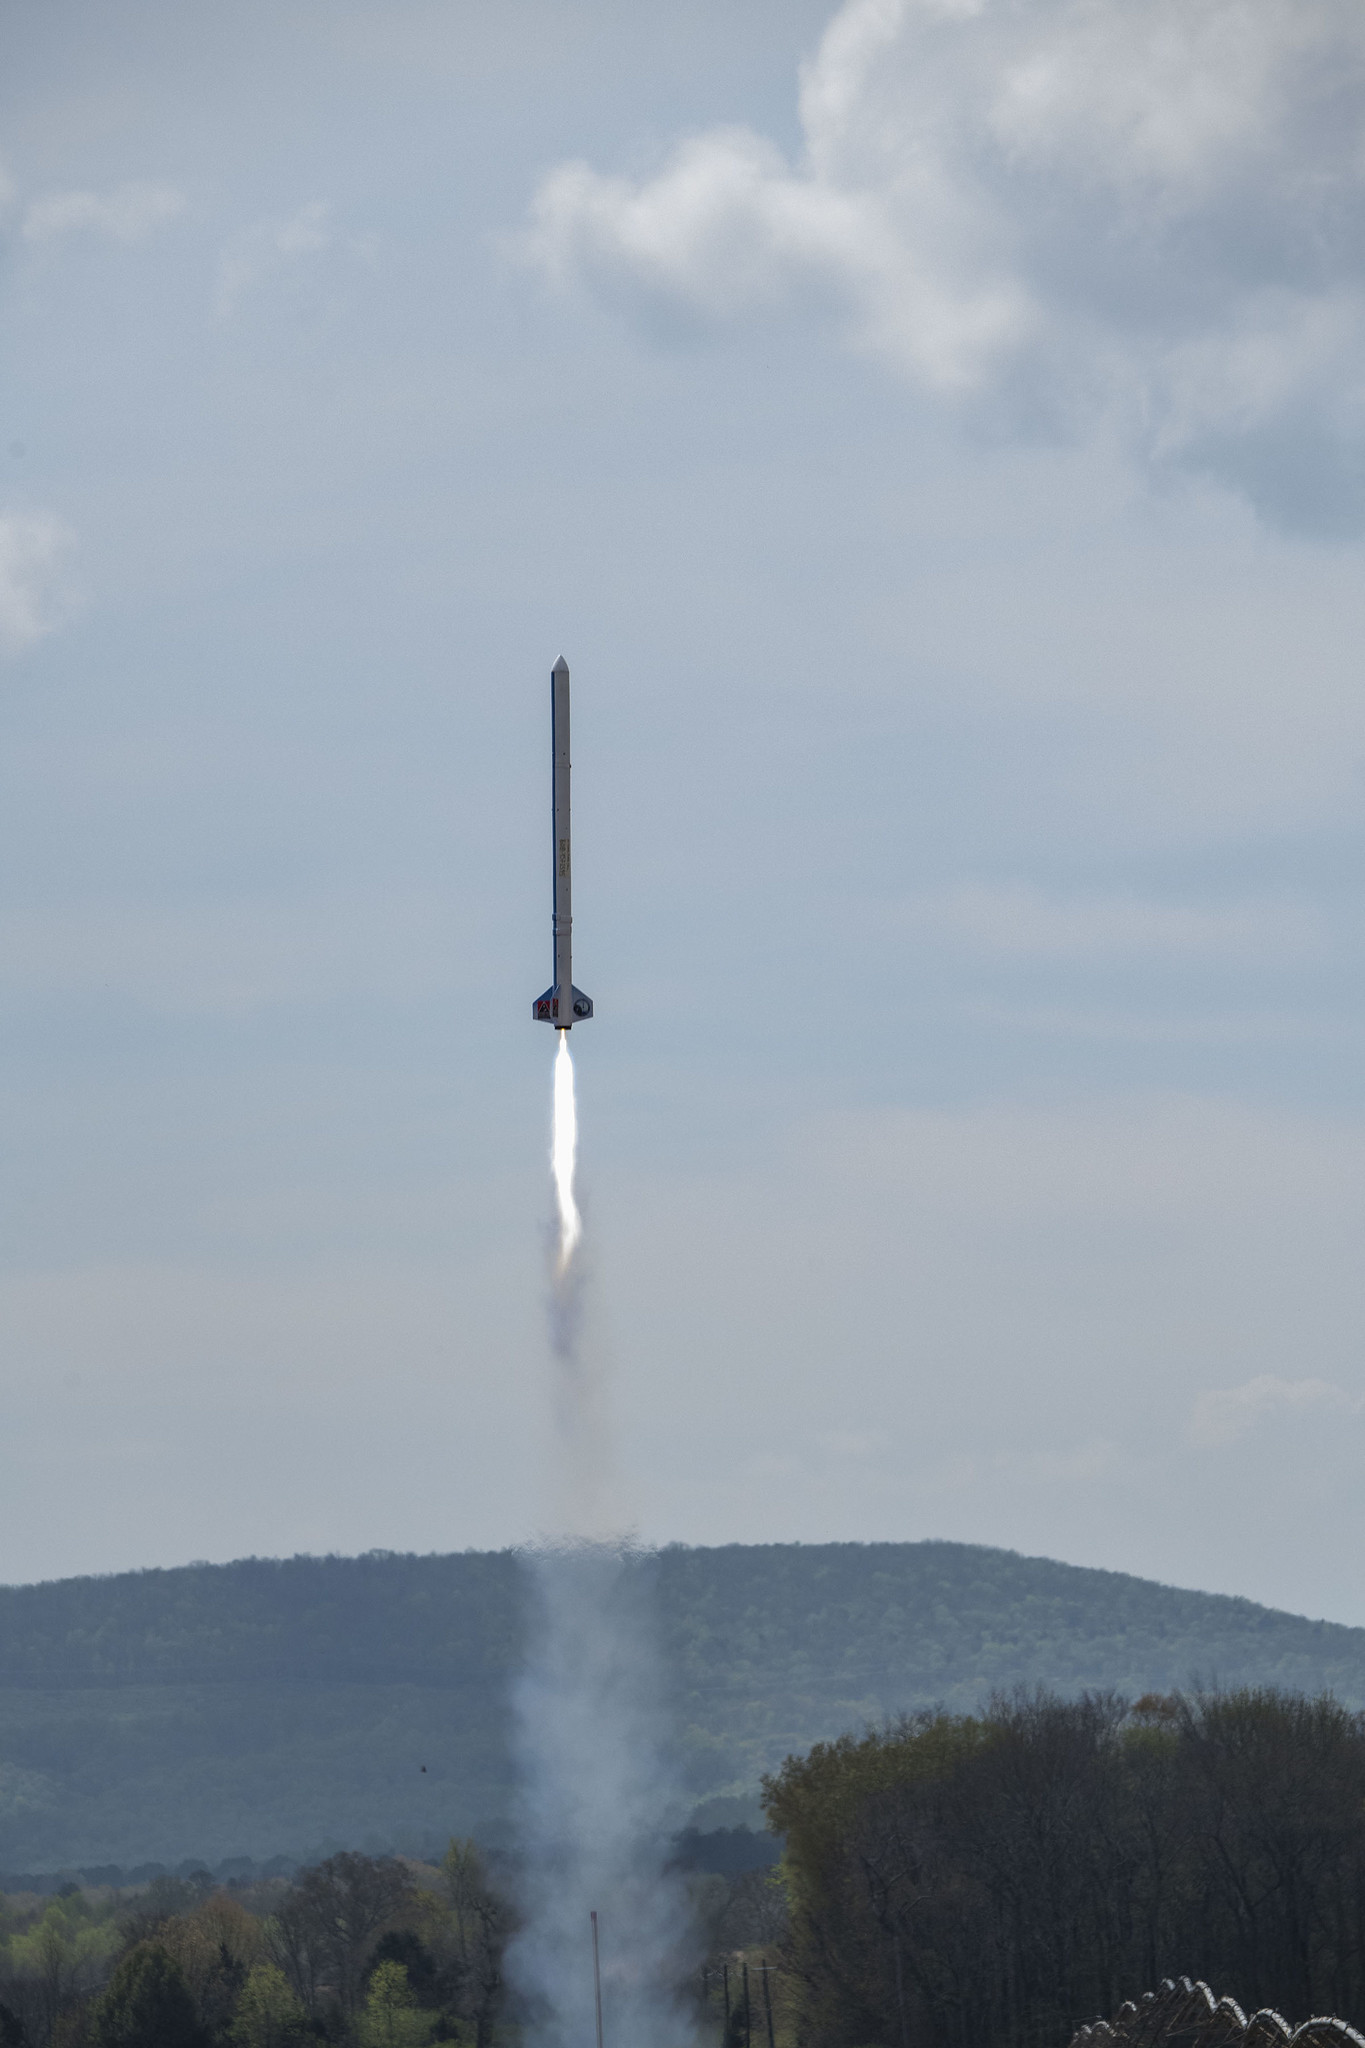 Amateur, high-power rocket launching